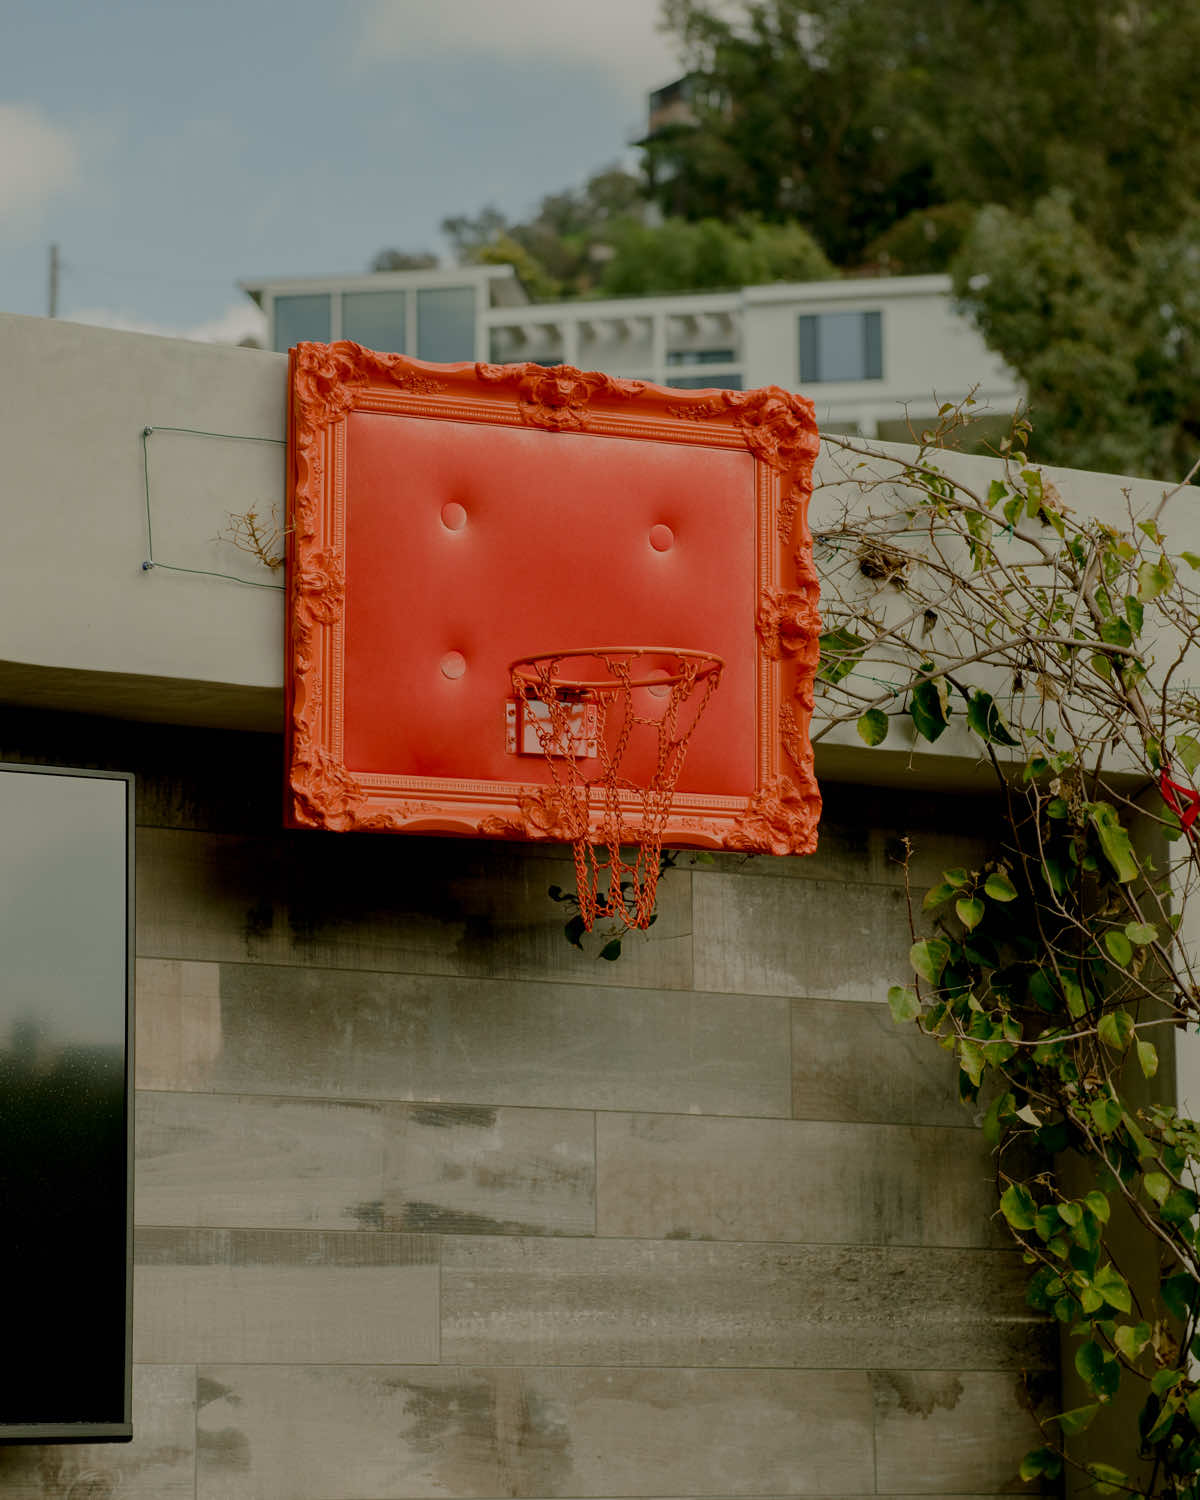 A basketball hoop on a wall.